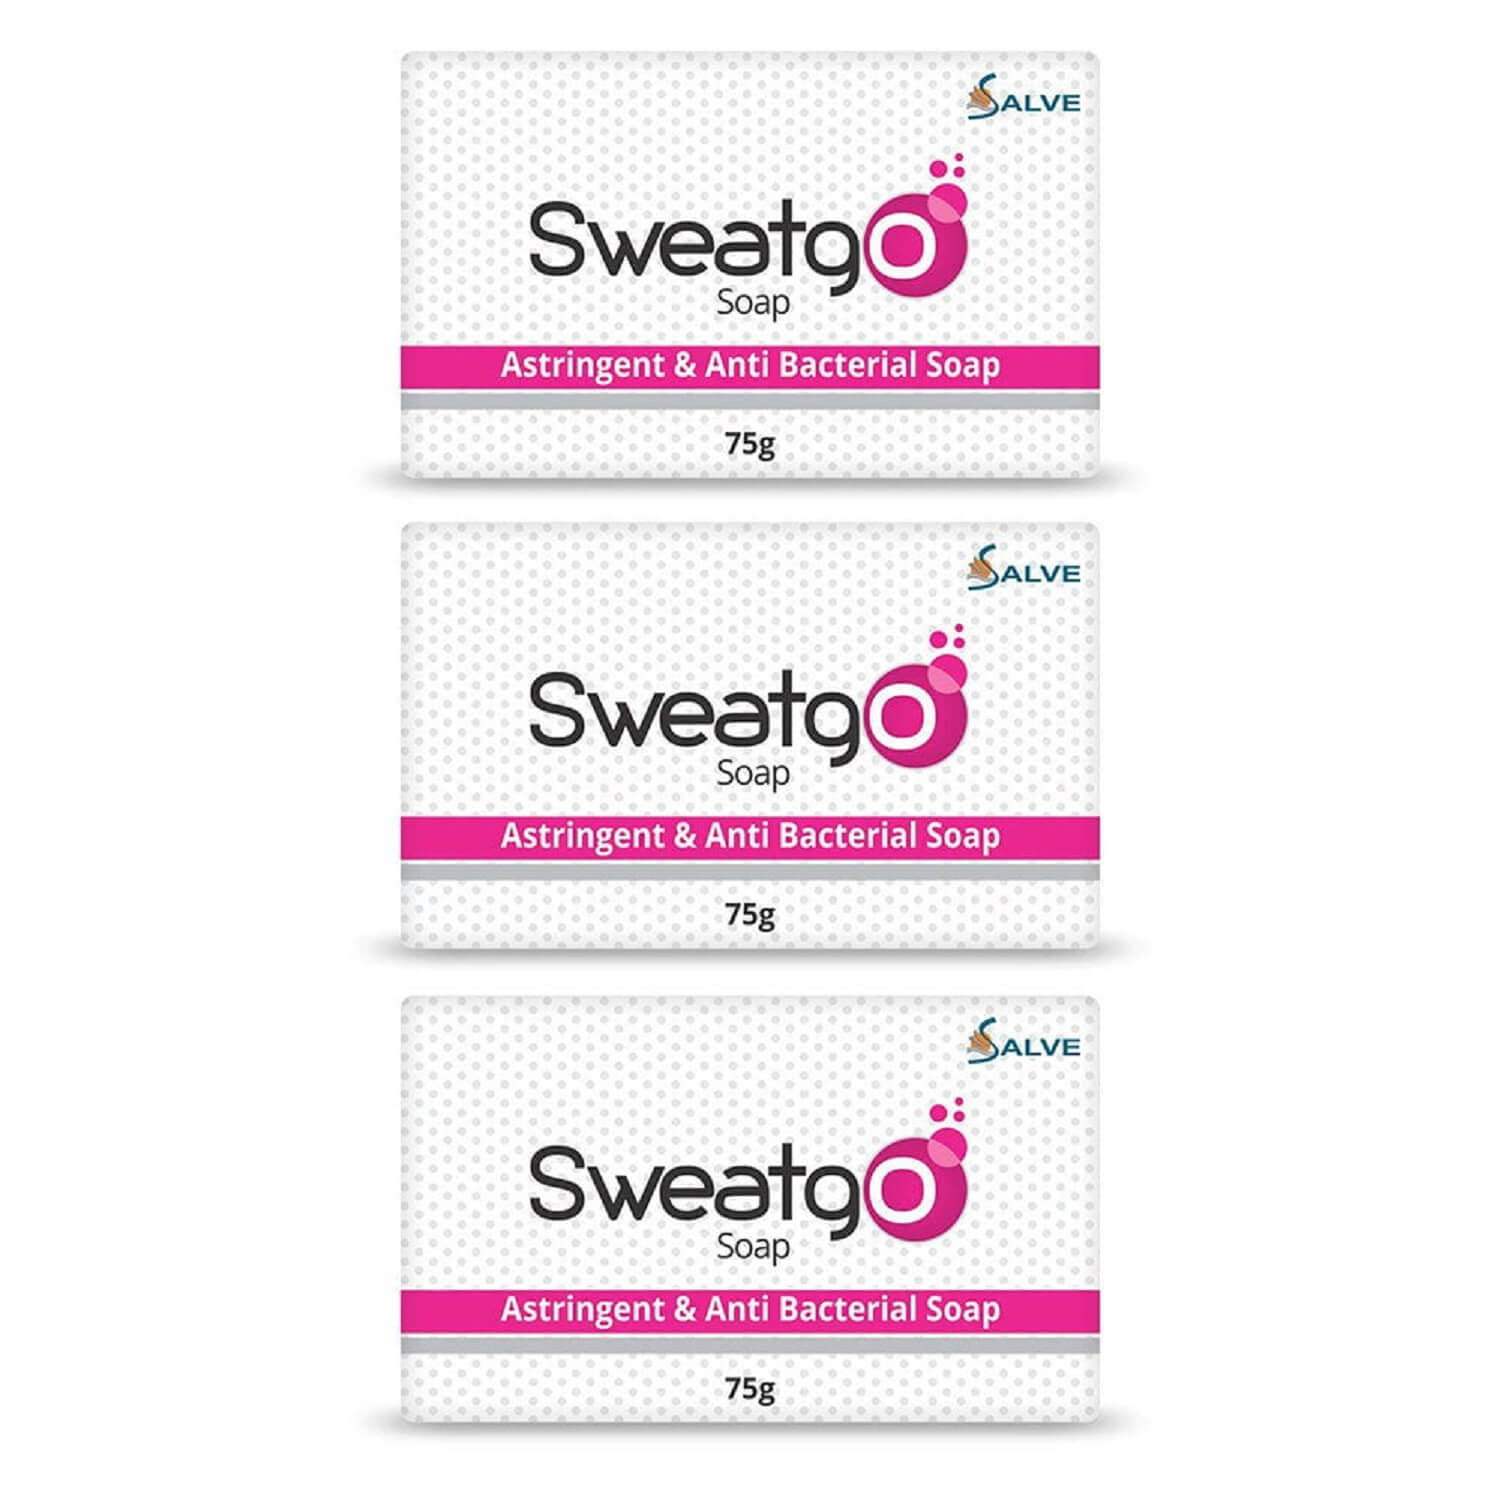 Shoprythm Sweatgo Pack of 3 Copy of Salve Sweatgo Antibacterial Astringent, Antiperspirant Soap for Control of Hyperhidrosis & Excessive